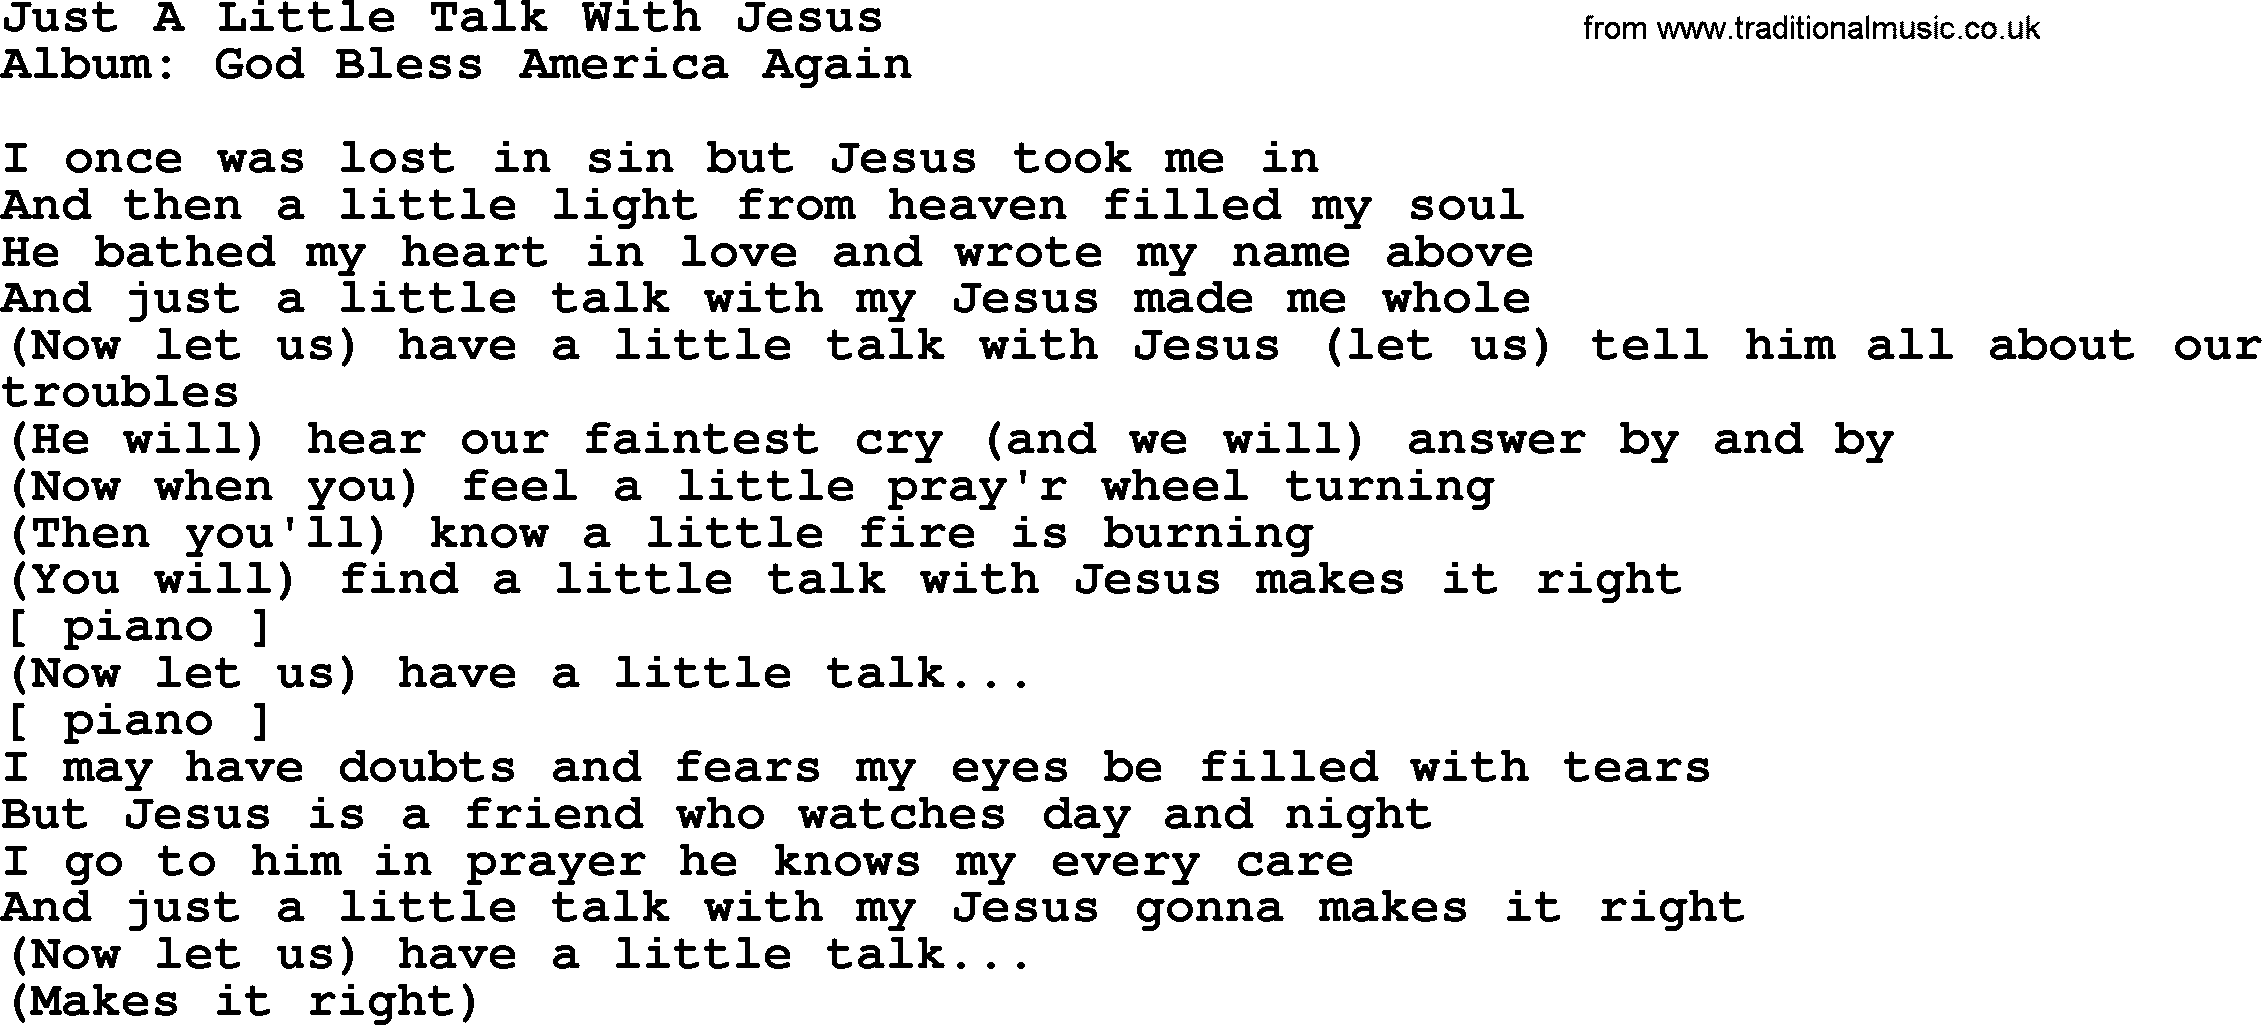 Loretta Lynn song: Just A Little Talk With Jesus lyrics